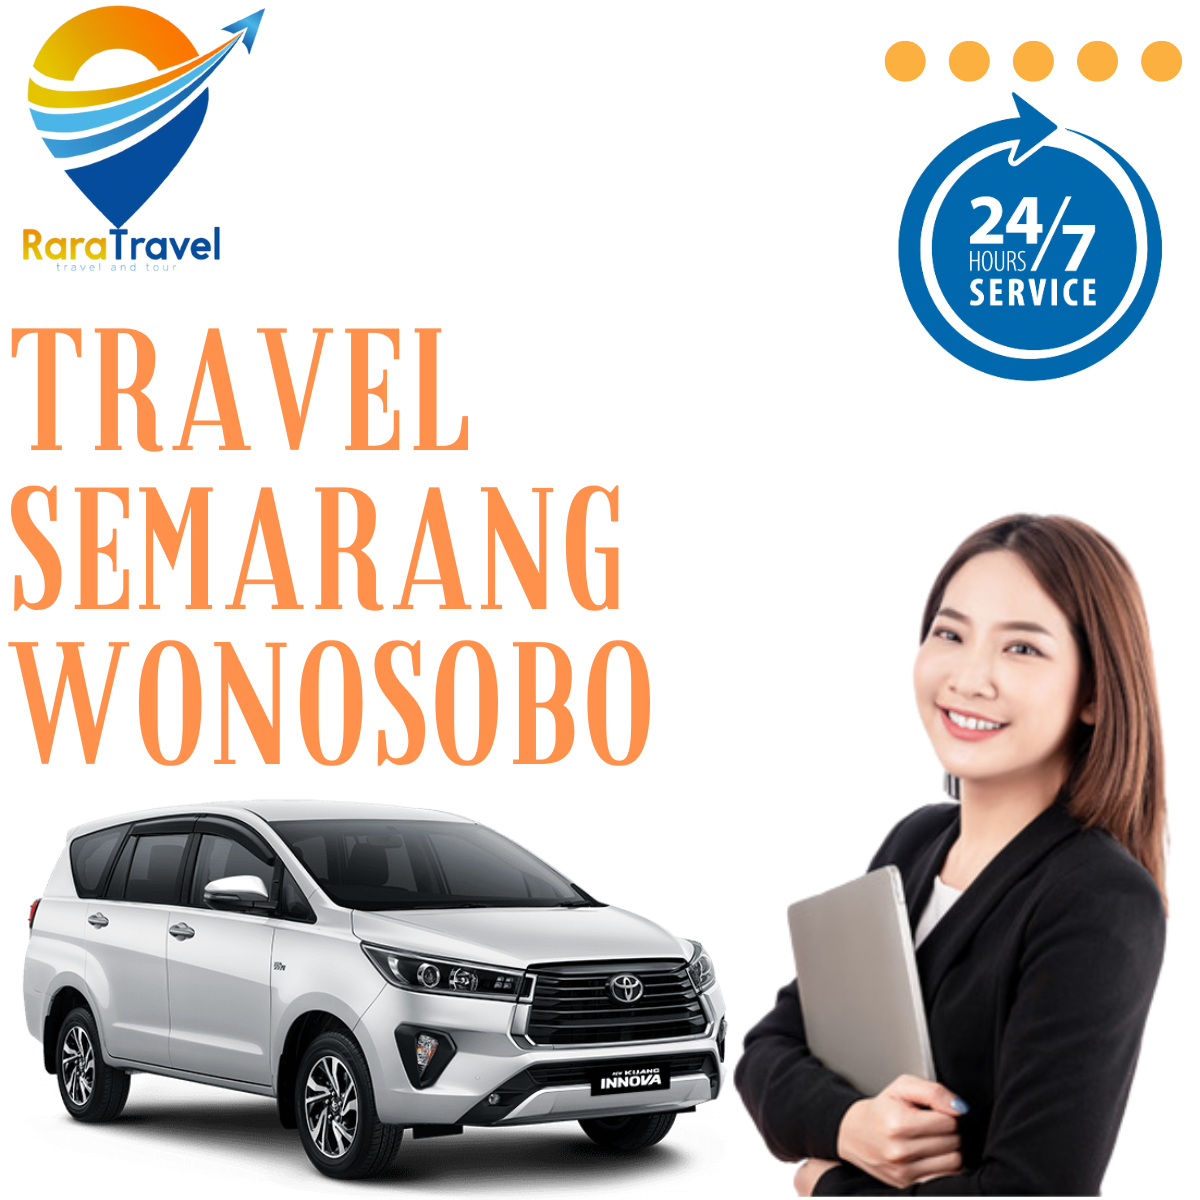 Travel Semarang Wonosobo PP Harga Murah - RARATRAVEL.ID